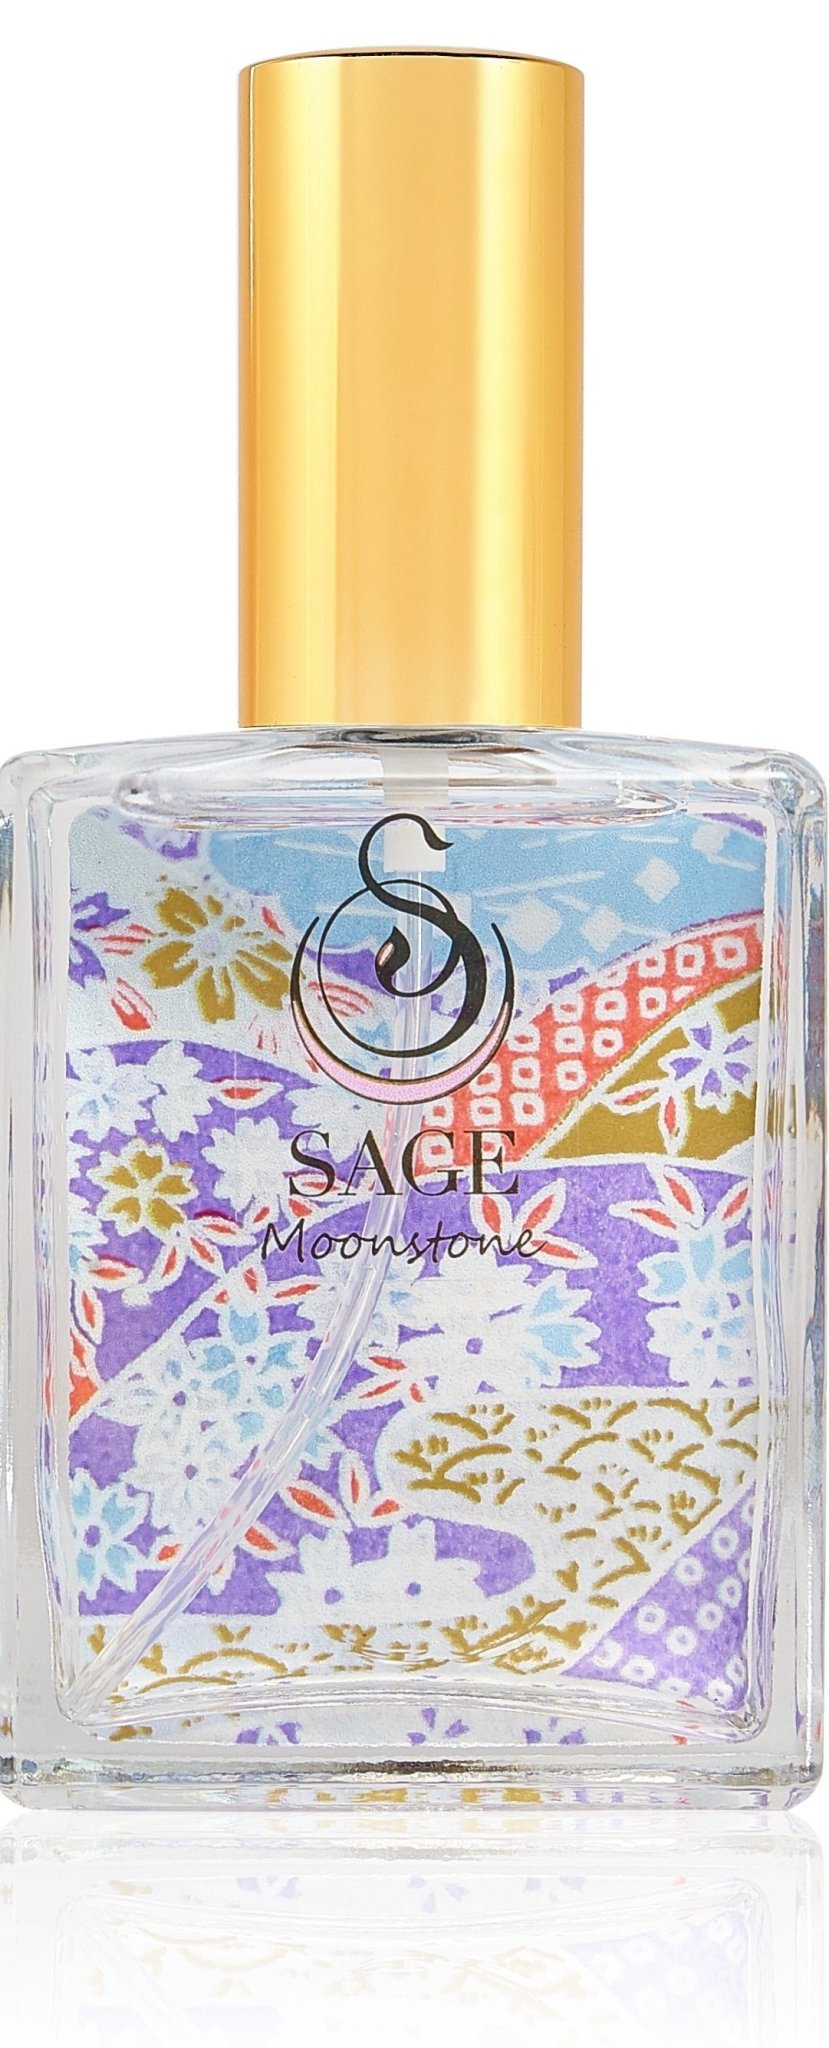  The Sage Lifestyle ONYX Eau de Toilette Spray Perfume (2 Oz/59  ml) - Travel Perfume, Vegan Perfume Oil - Feel Subtle Hint of Oakmoss,  Vanilla Nectar, Tunisian Amber & Sheer Musk 